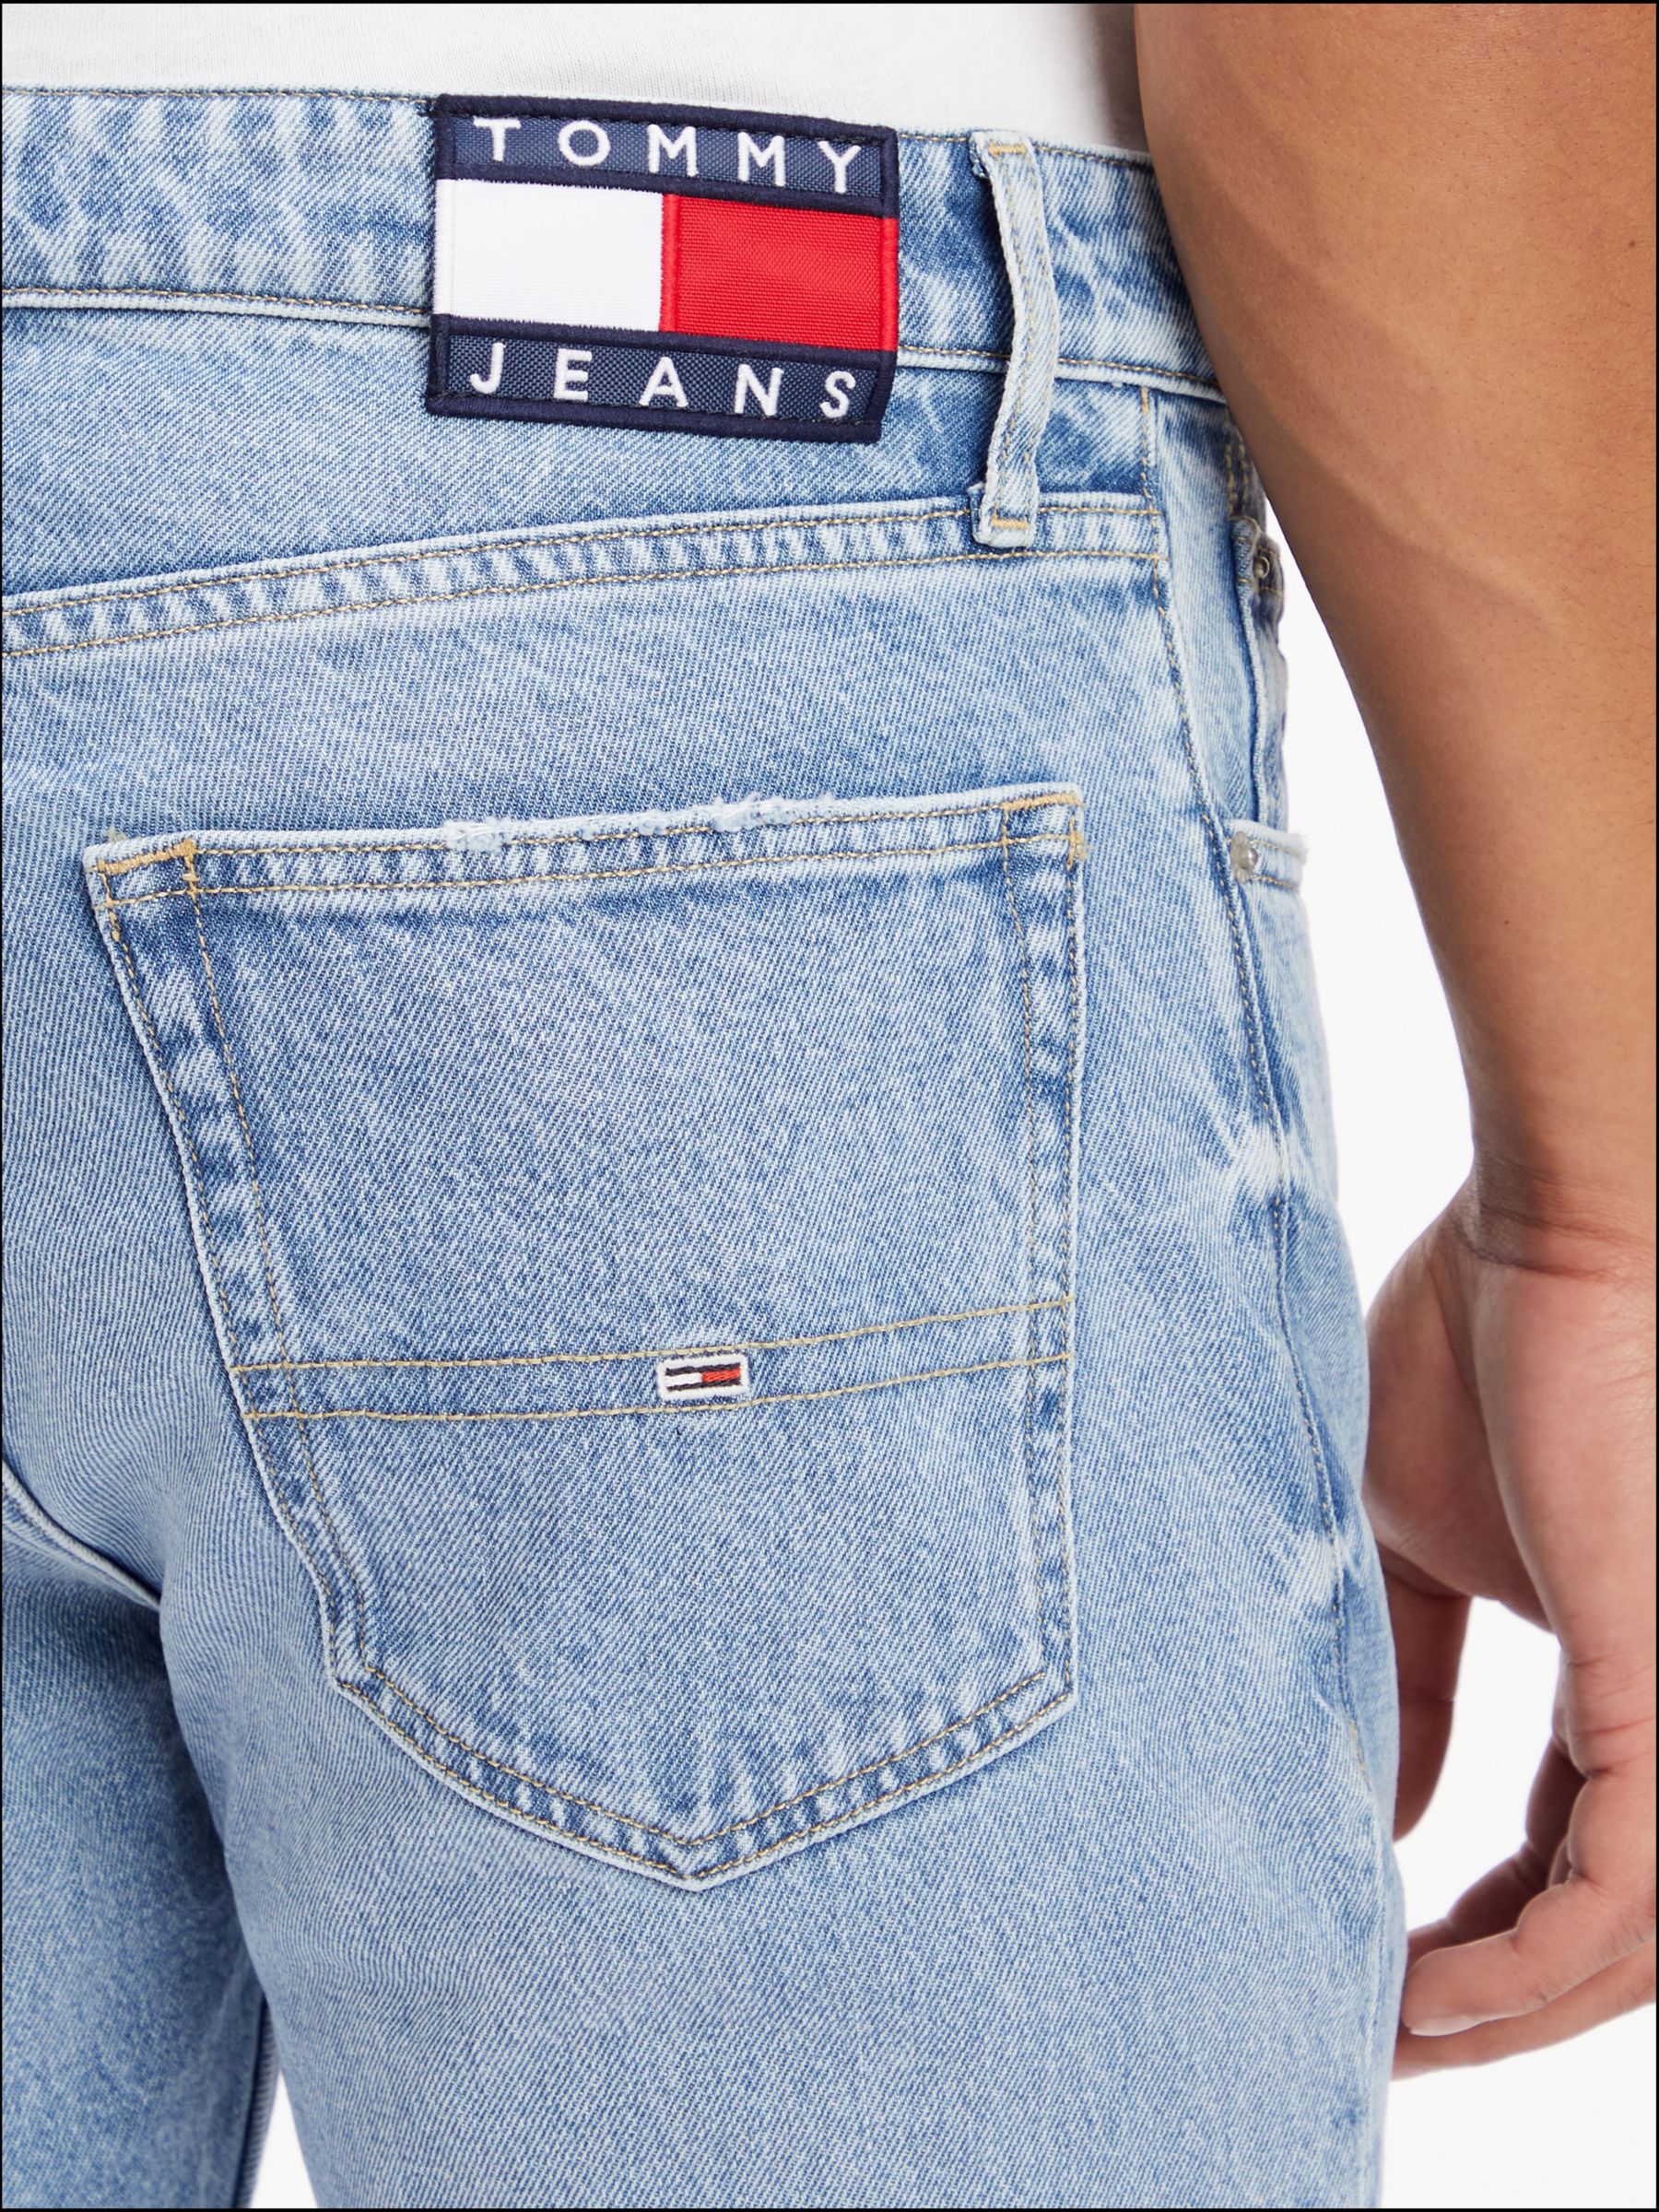 Tommy Jeans Ryan Straight Fit Jeans, Denim Light 02, 32R